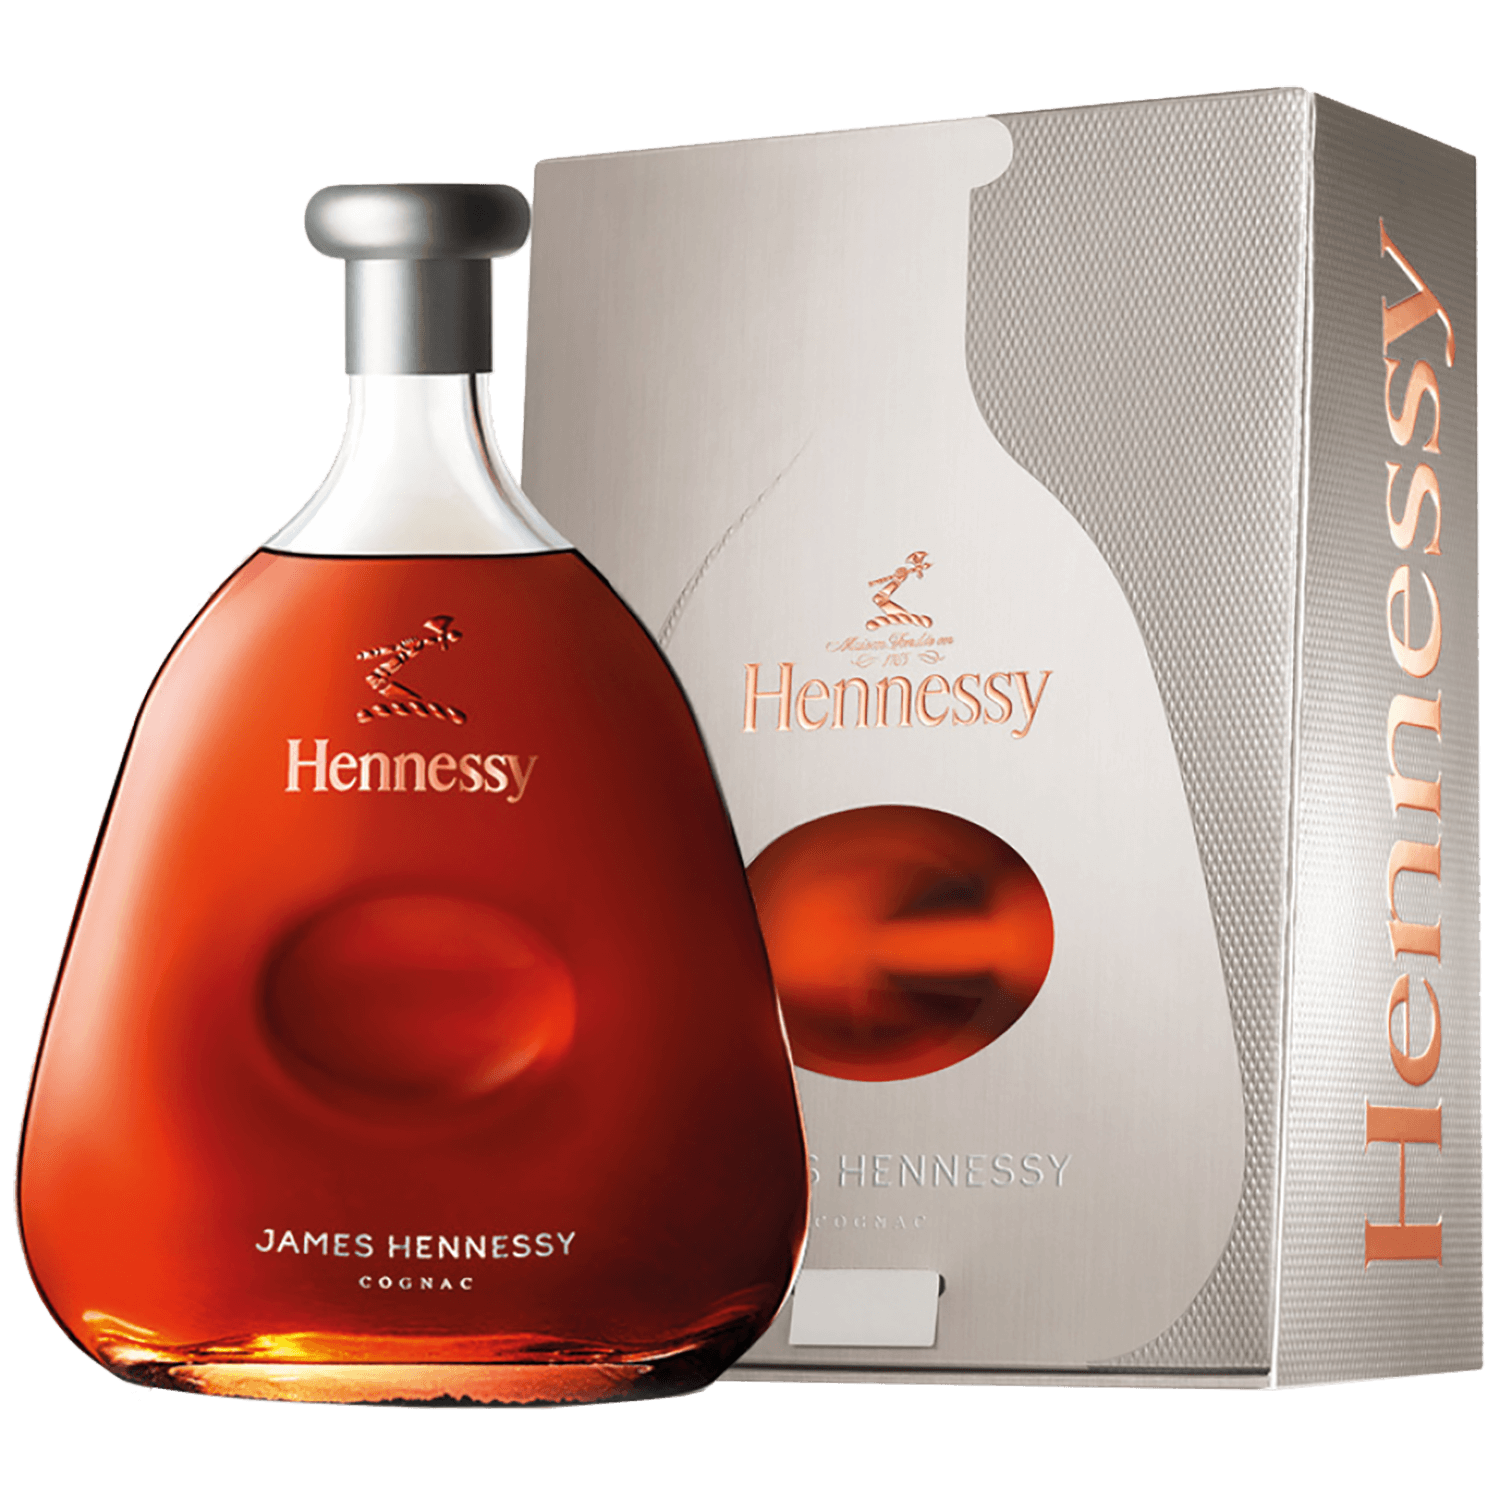 Hennessy James Hennessy Cognac (gift box) hennessy park hotel